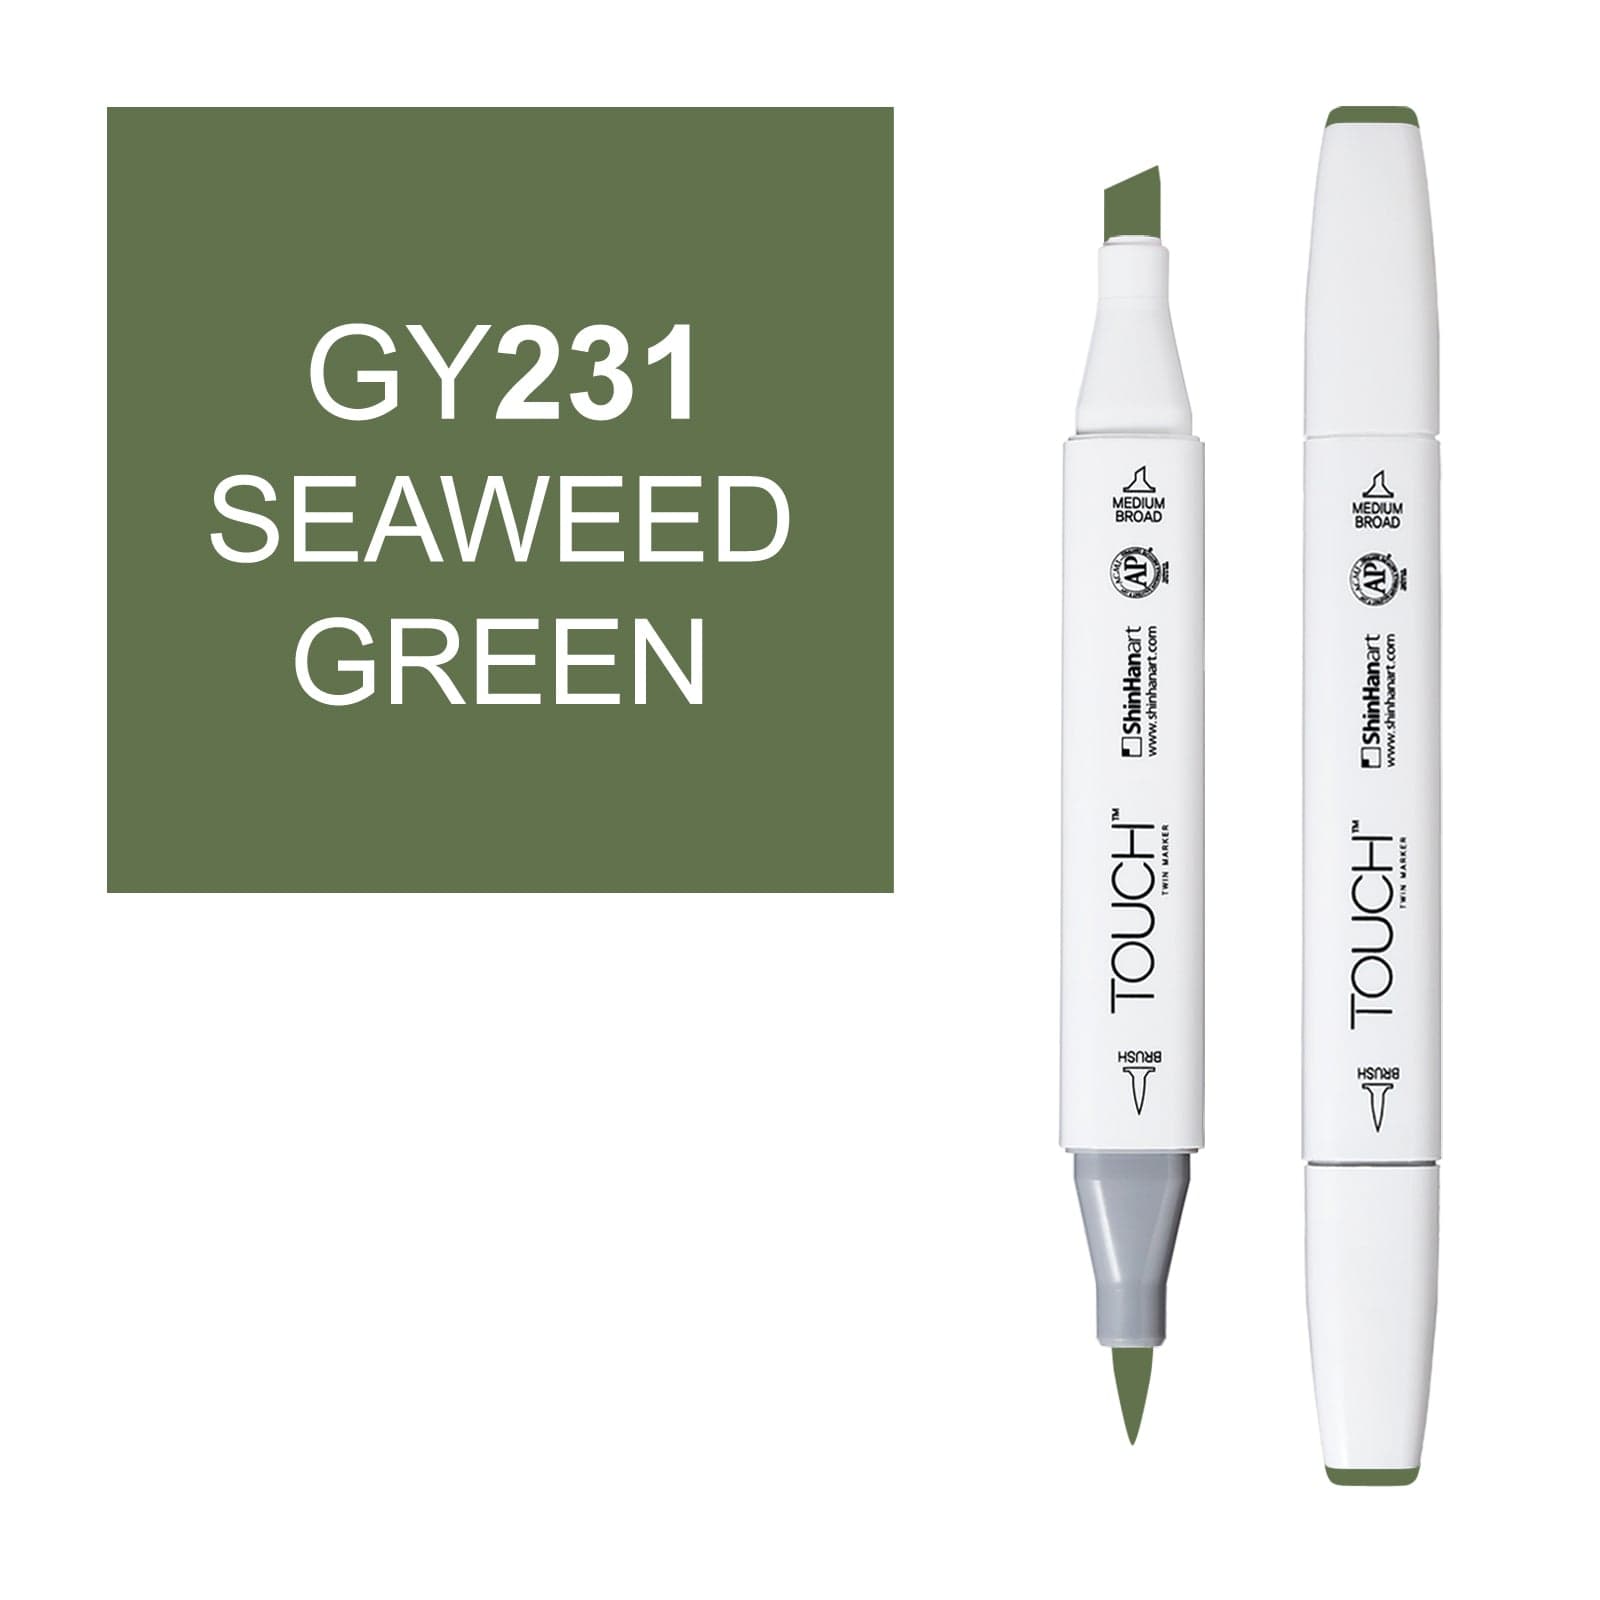 ShinHanart Touch Twin Brush Markers seaweed green